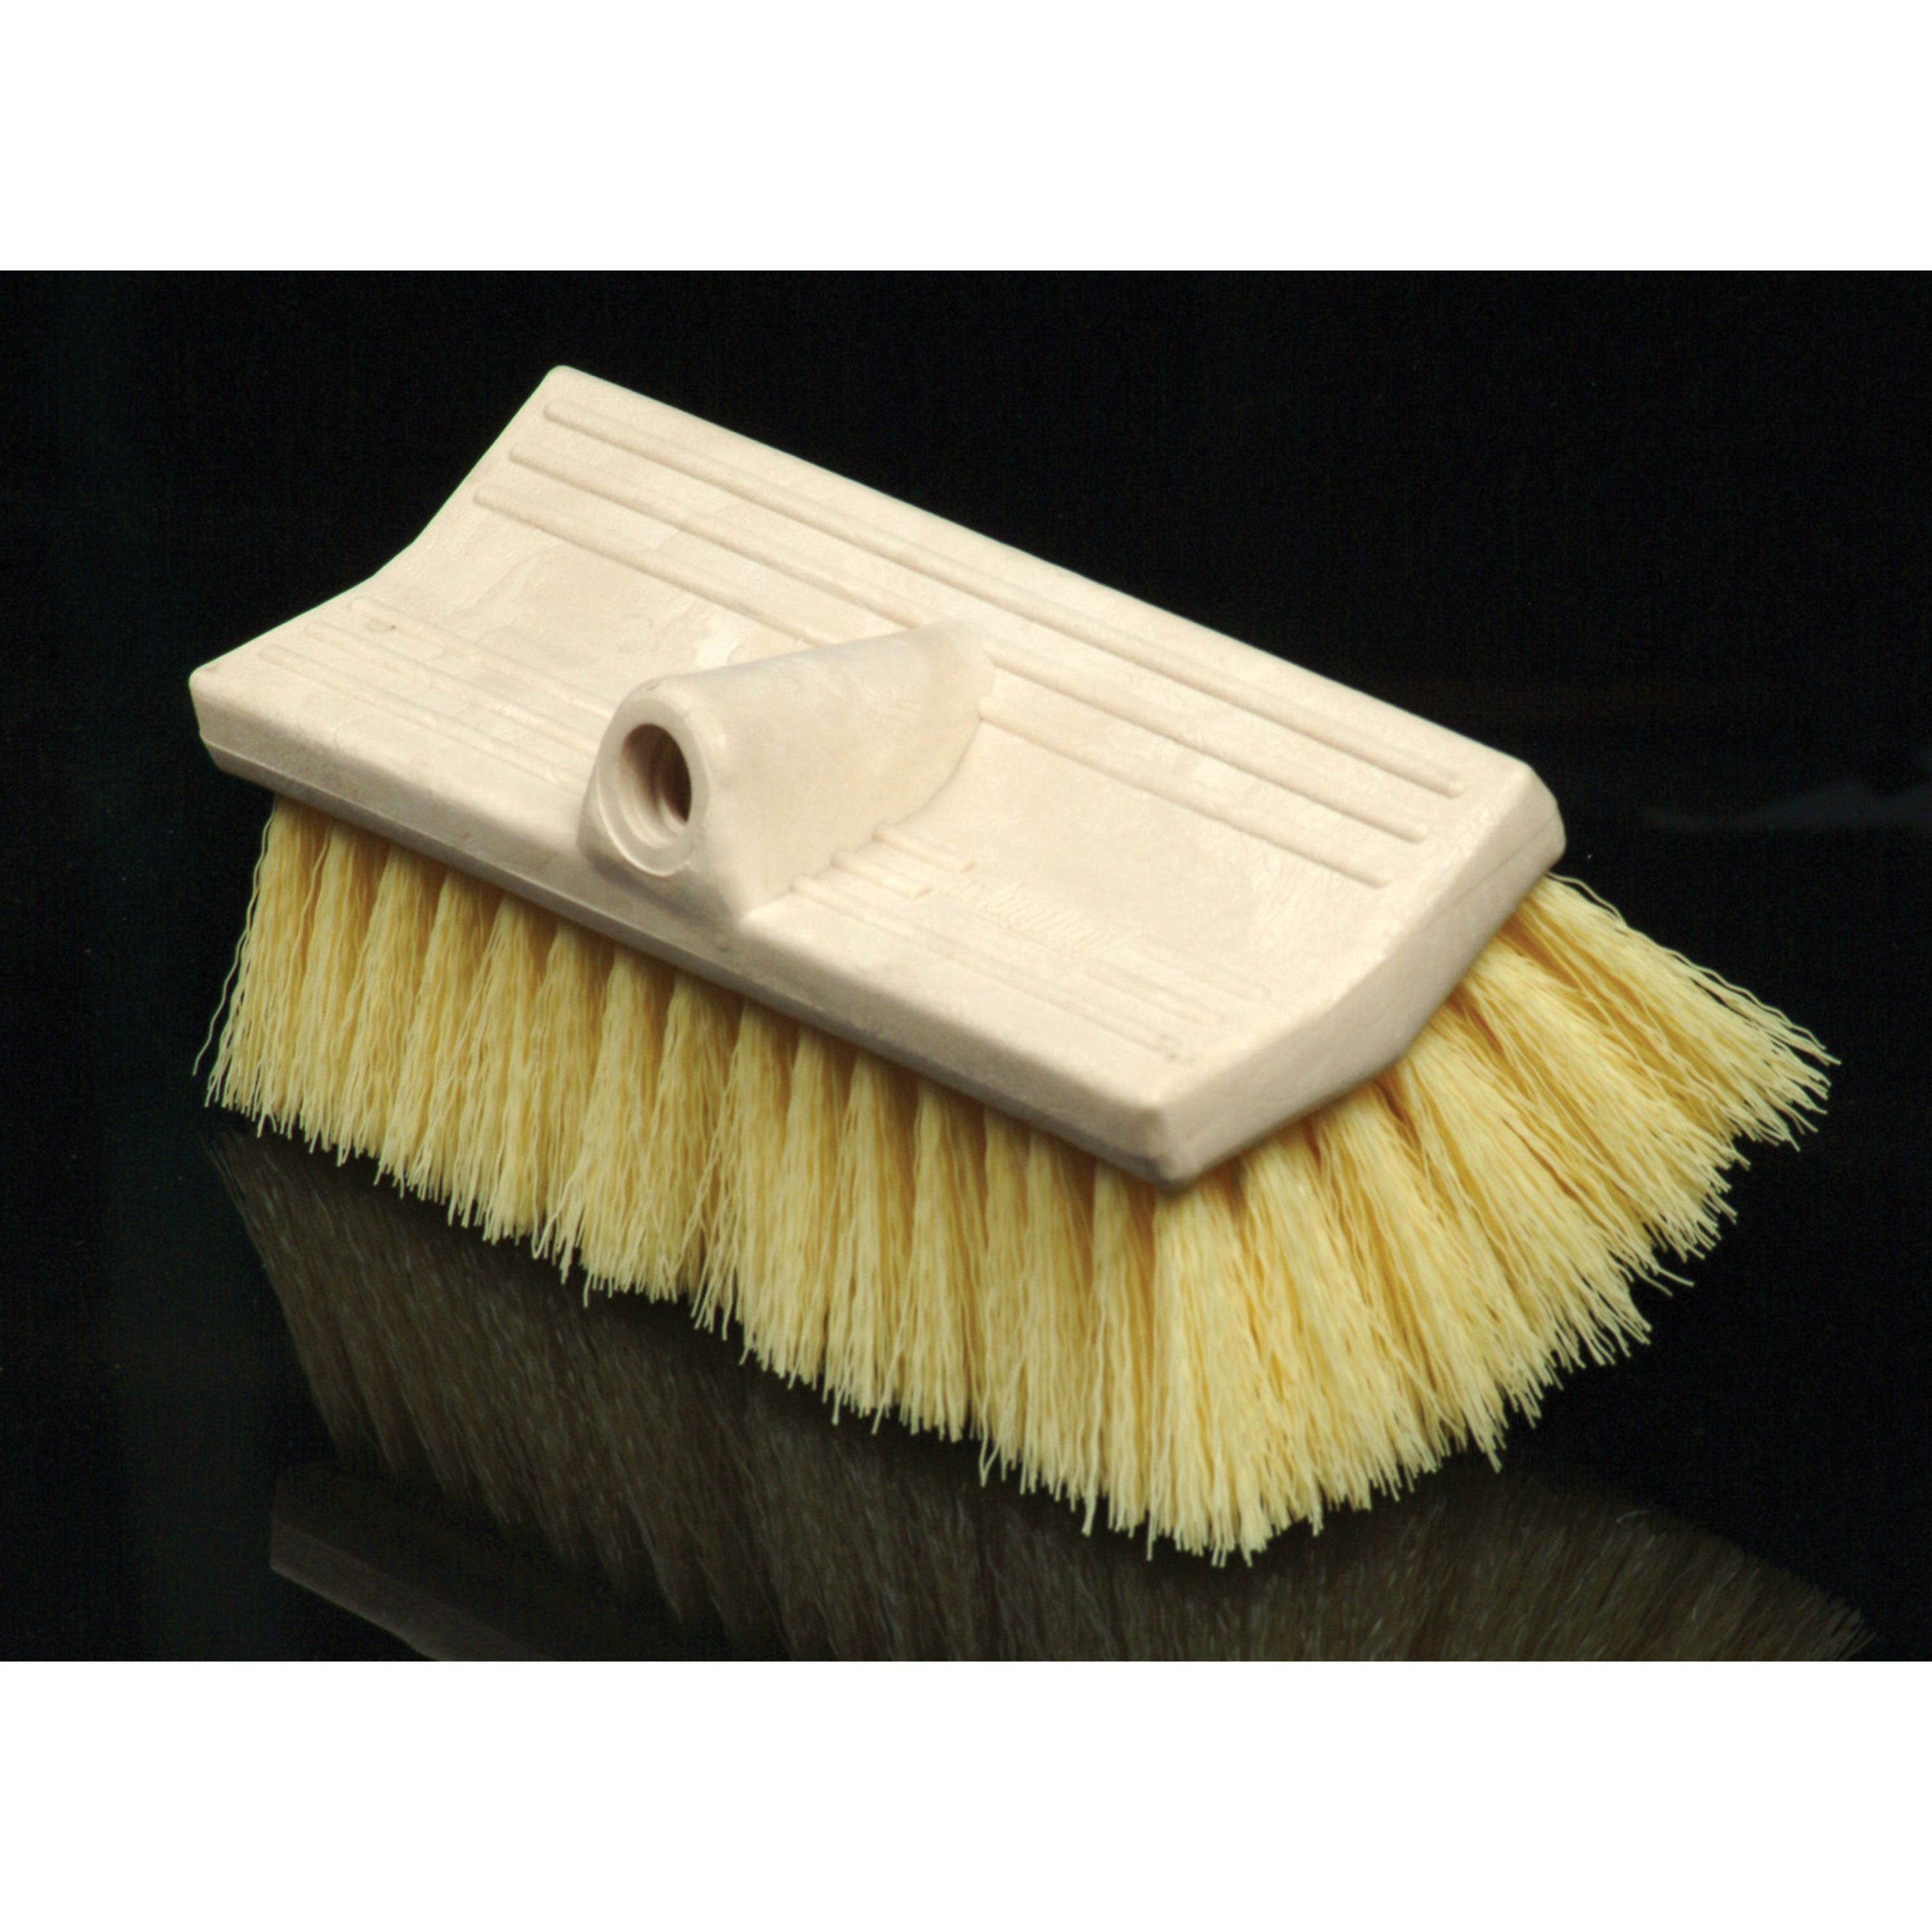 Mr. LongArm 0488 Flow-Thru Bi-Level Cleaning Brush - Stiff